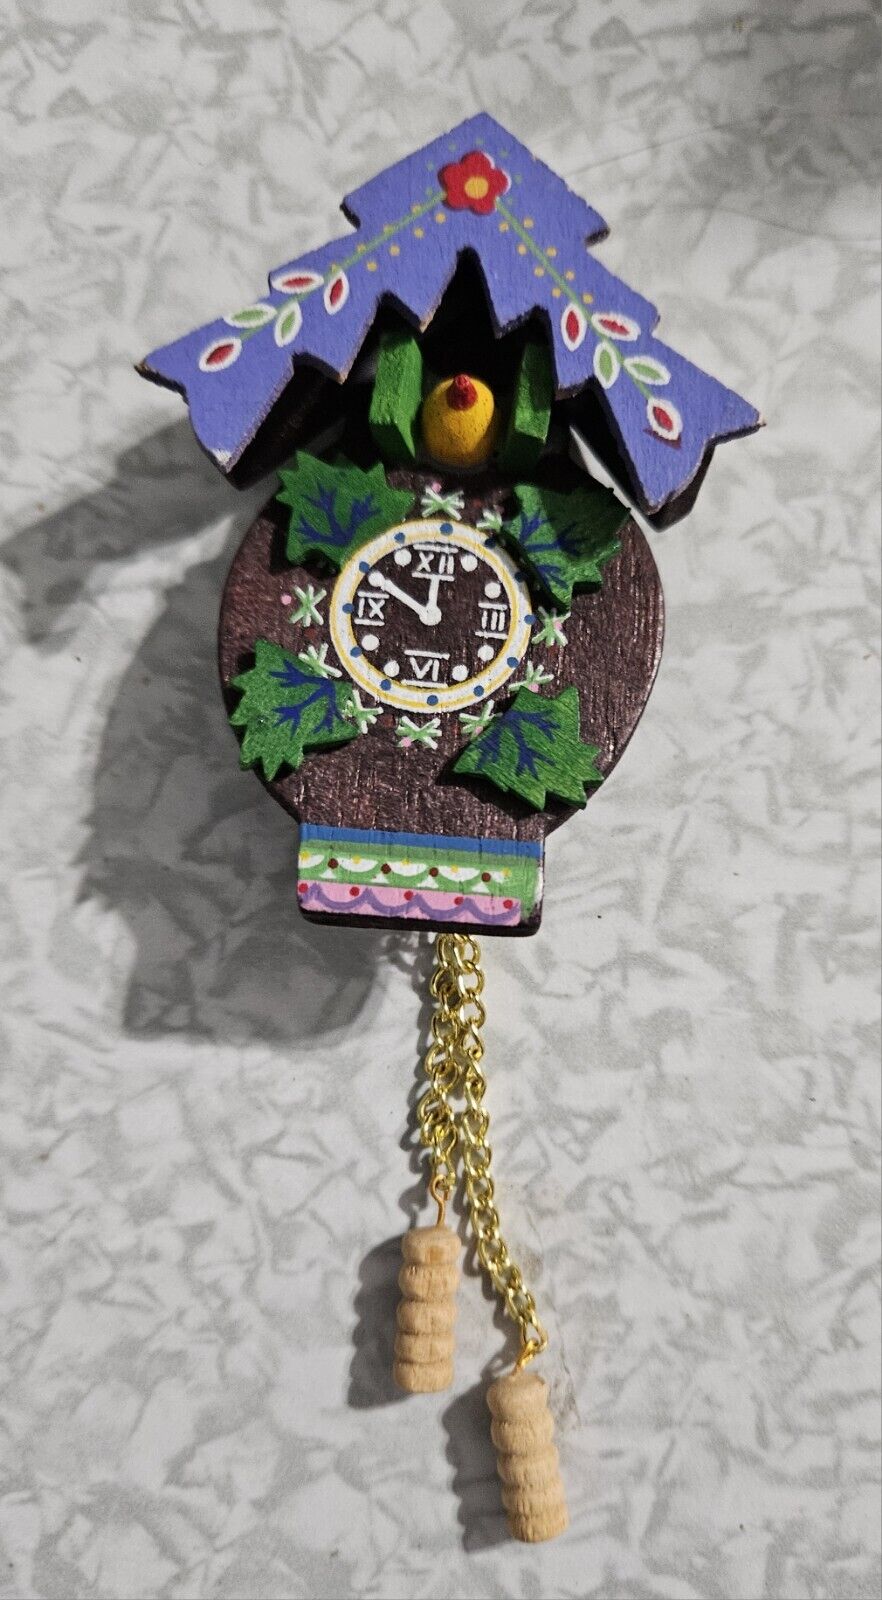 Vintage Wooden Handpainted Cockoo Clock Ornament 